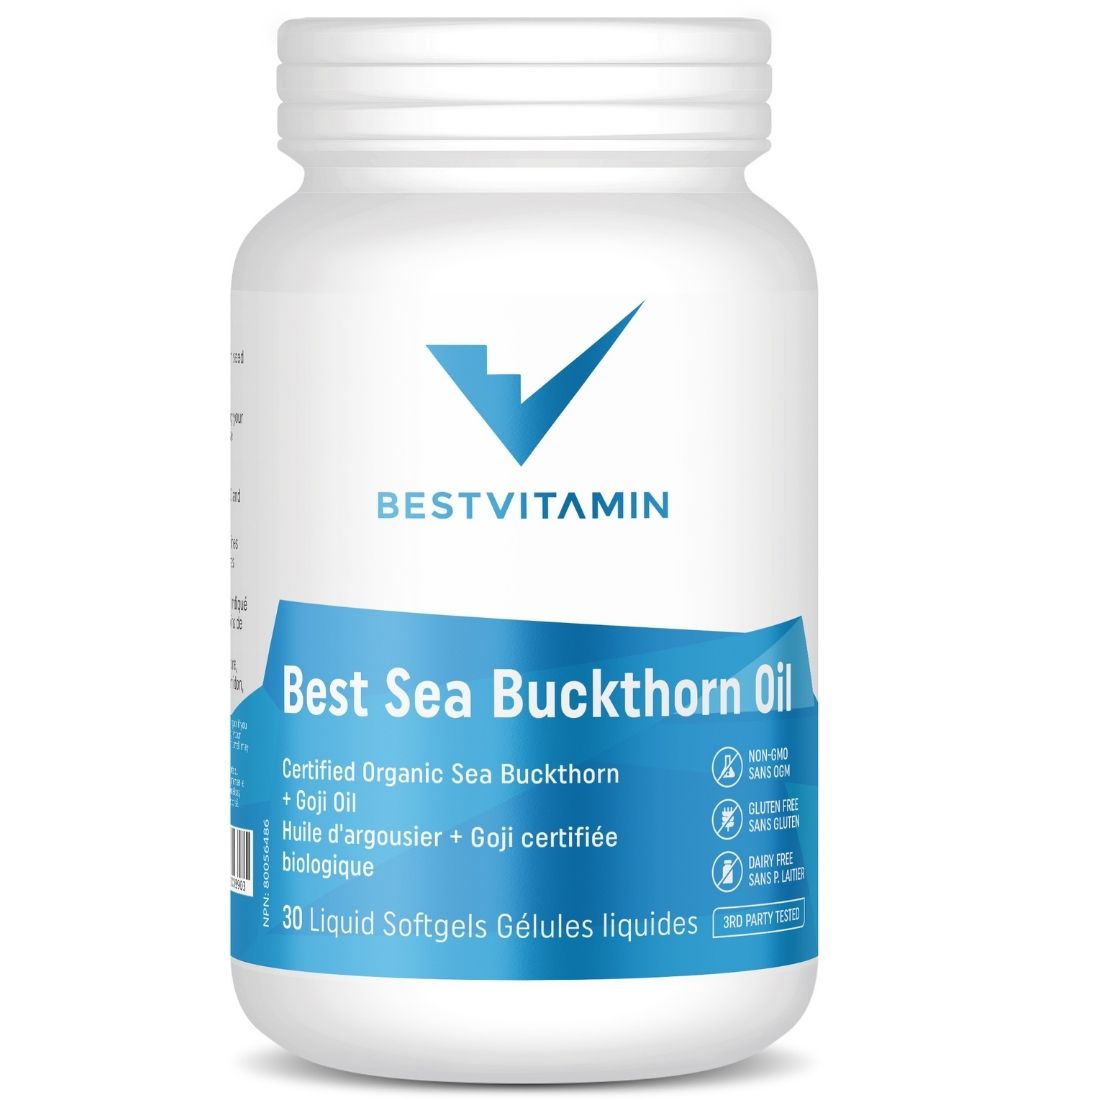 BestVitamin Best Sea Buckthorn Oil 1000mg Plus Goji Berry, Certified Organic Omega 7 Oil, 30 Liquid Softgels